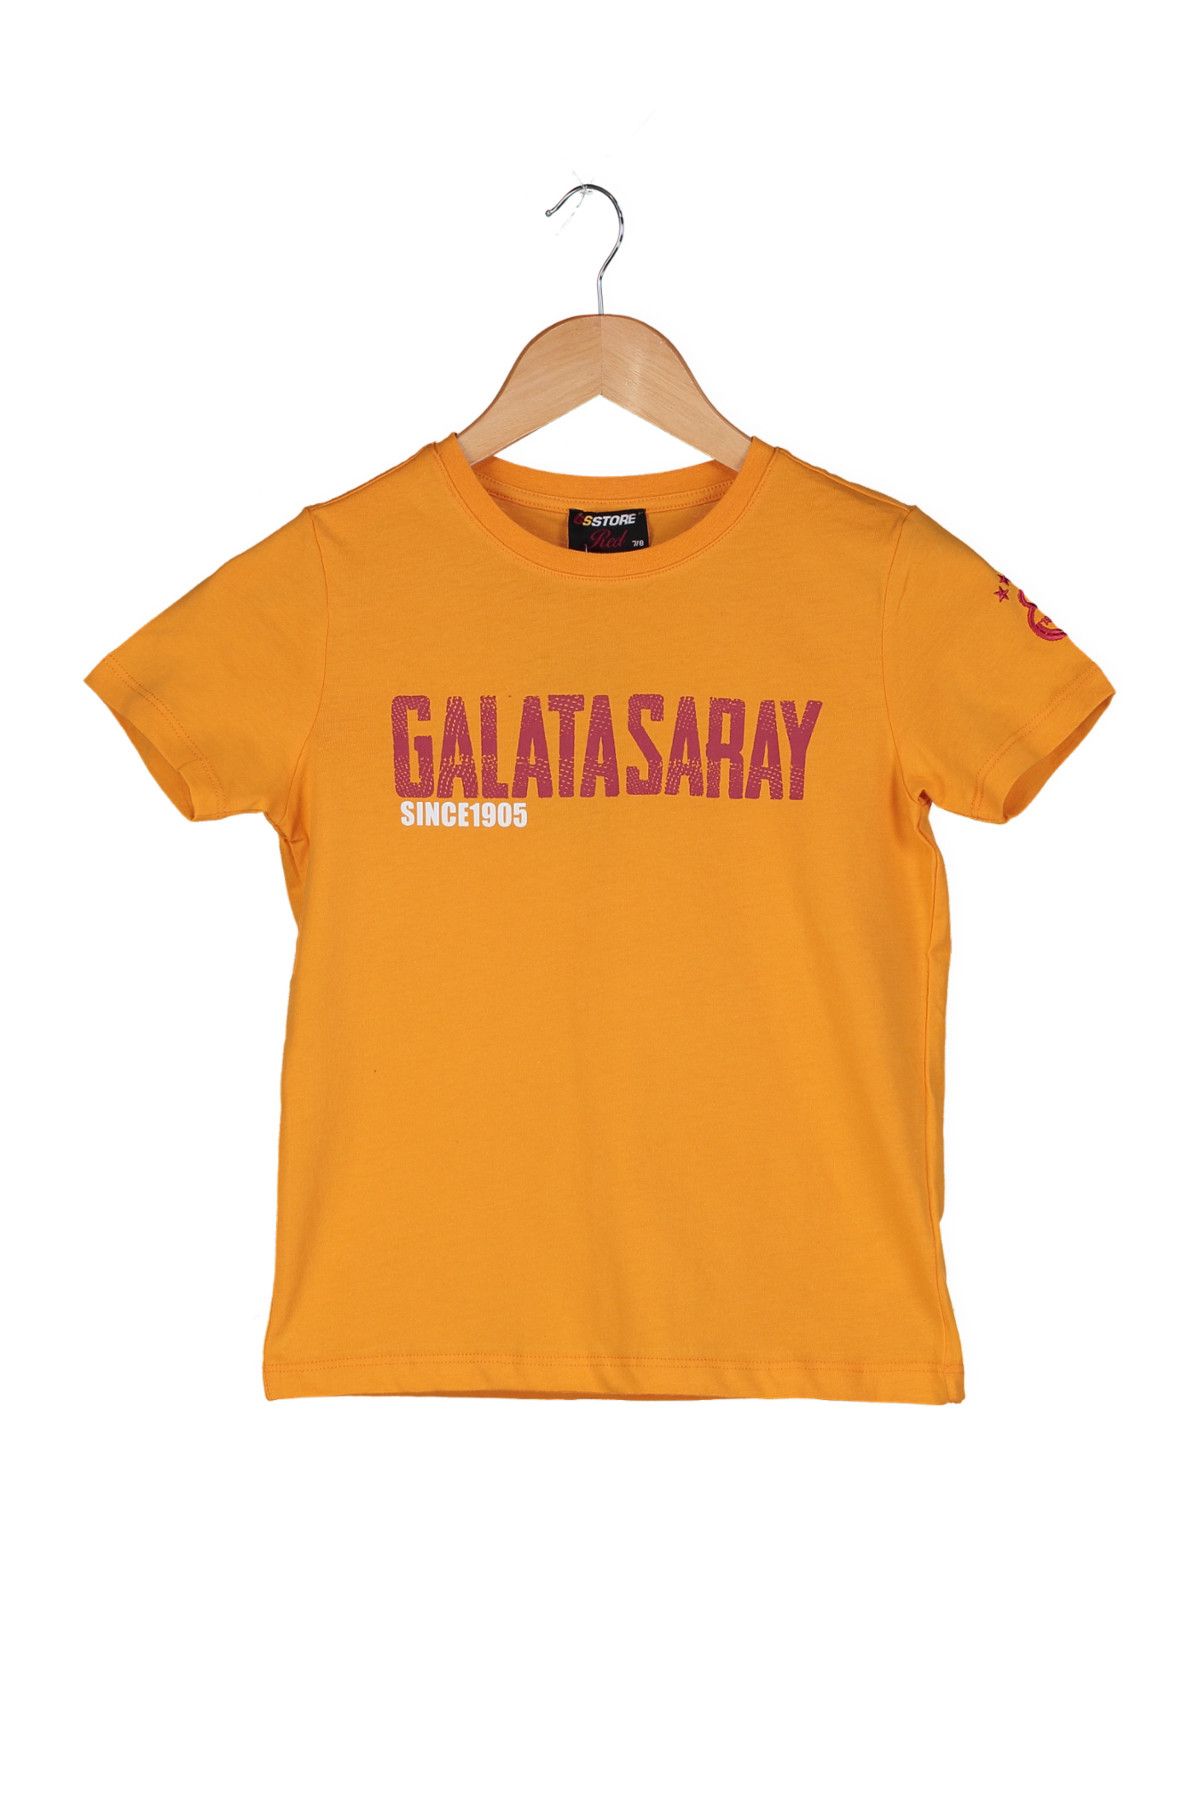 Galatasaray Çocuk Sarı T-Shirt K023-C85685